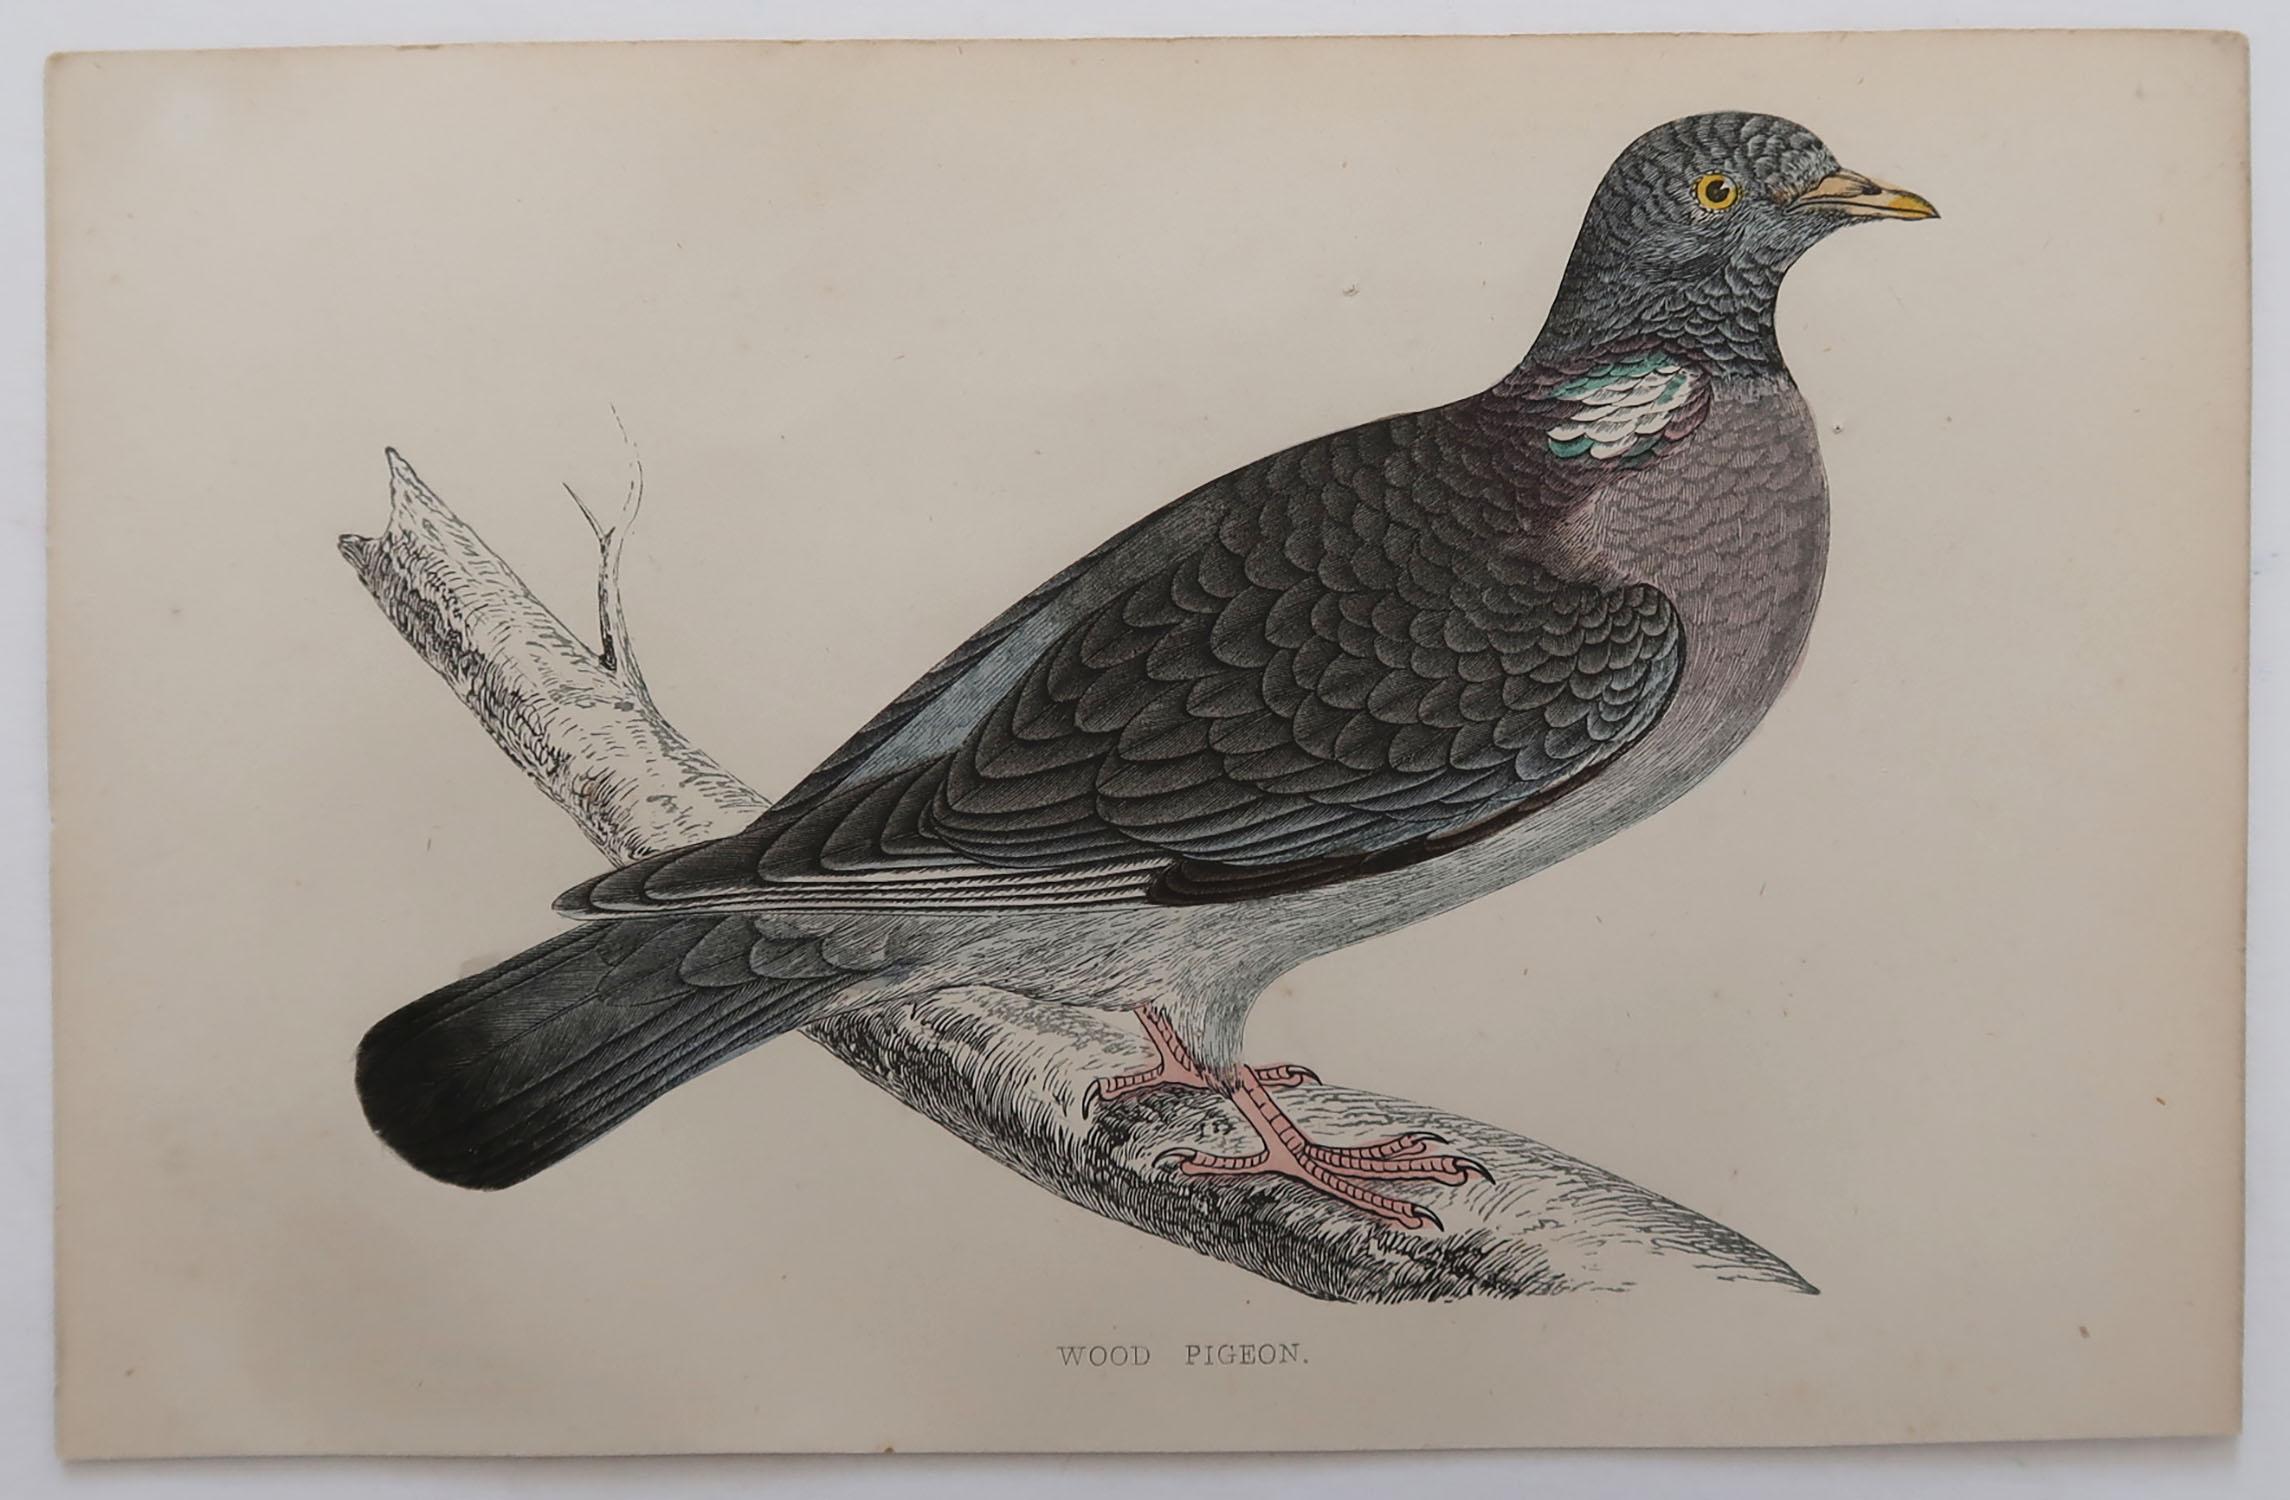 Folk Art Original Antique Bird Print, the Wood Pigeon, circa 1870